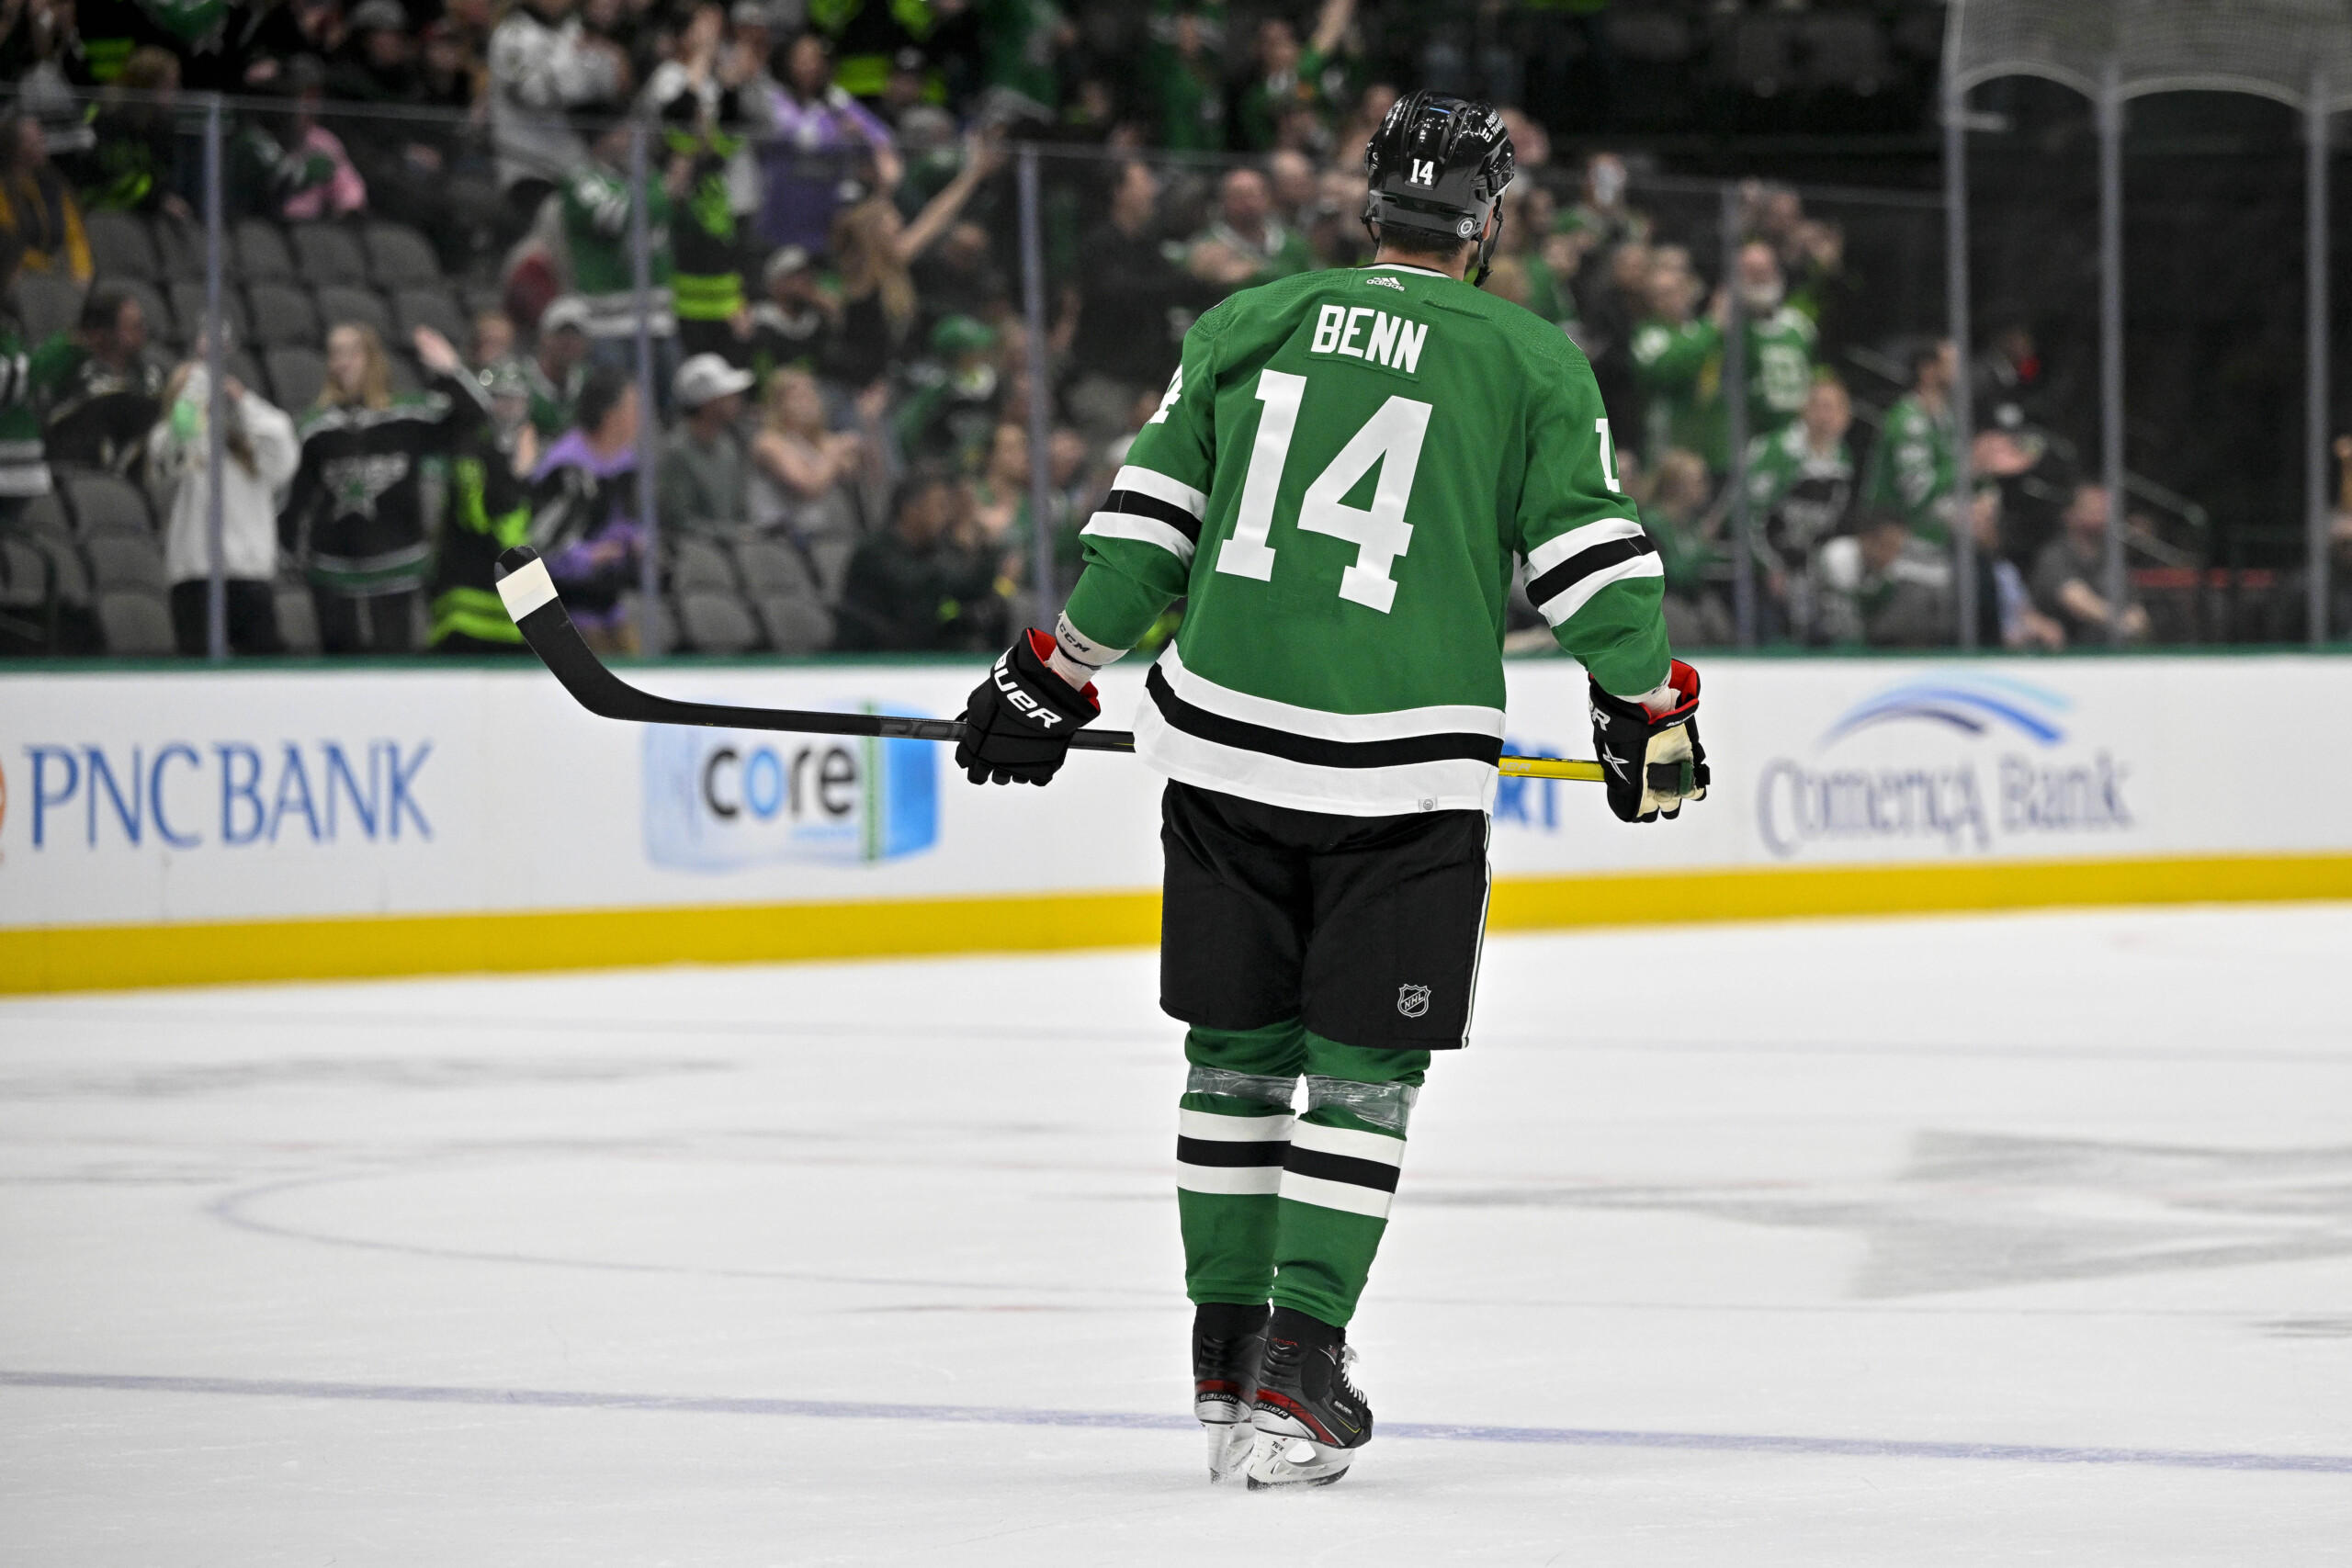 Jamie Benn's rise to NHL stardom almost never happened